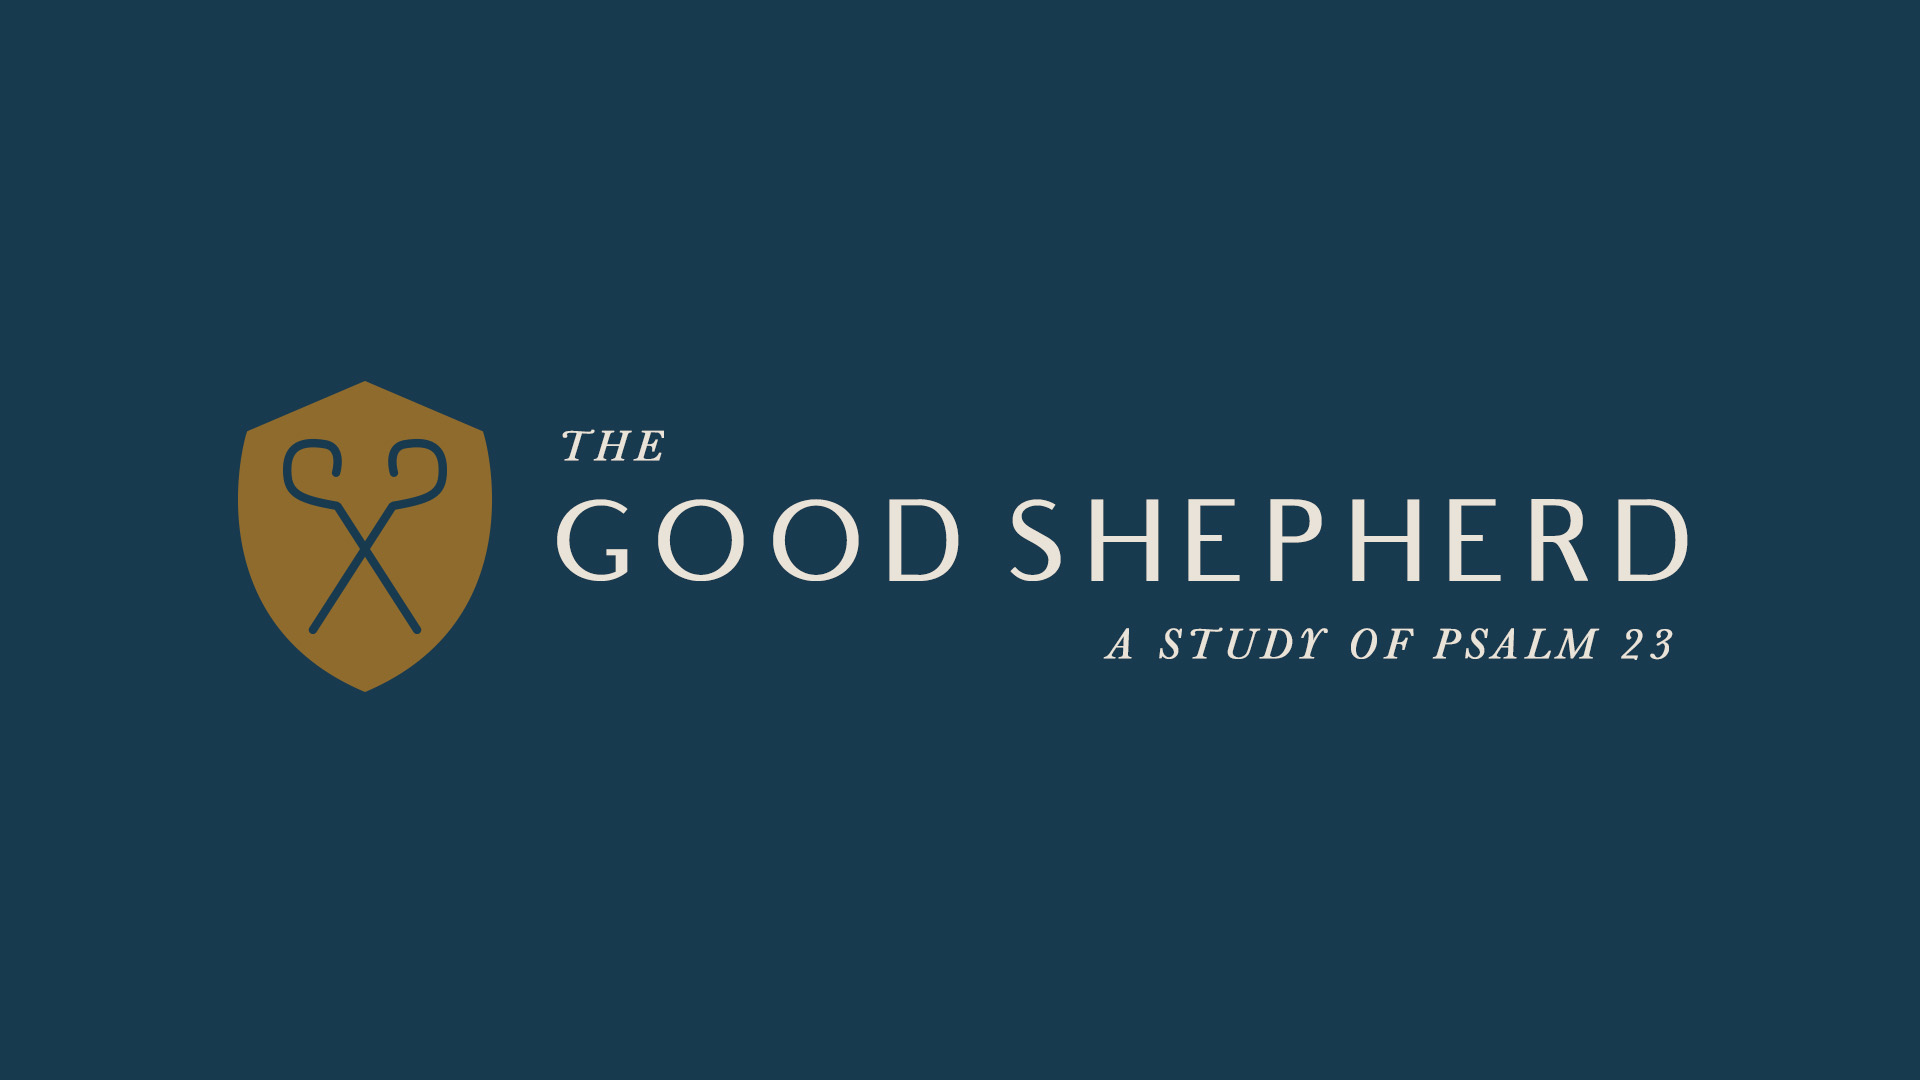 The Good Shepherd V2 Screen-Main image